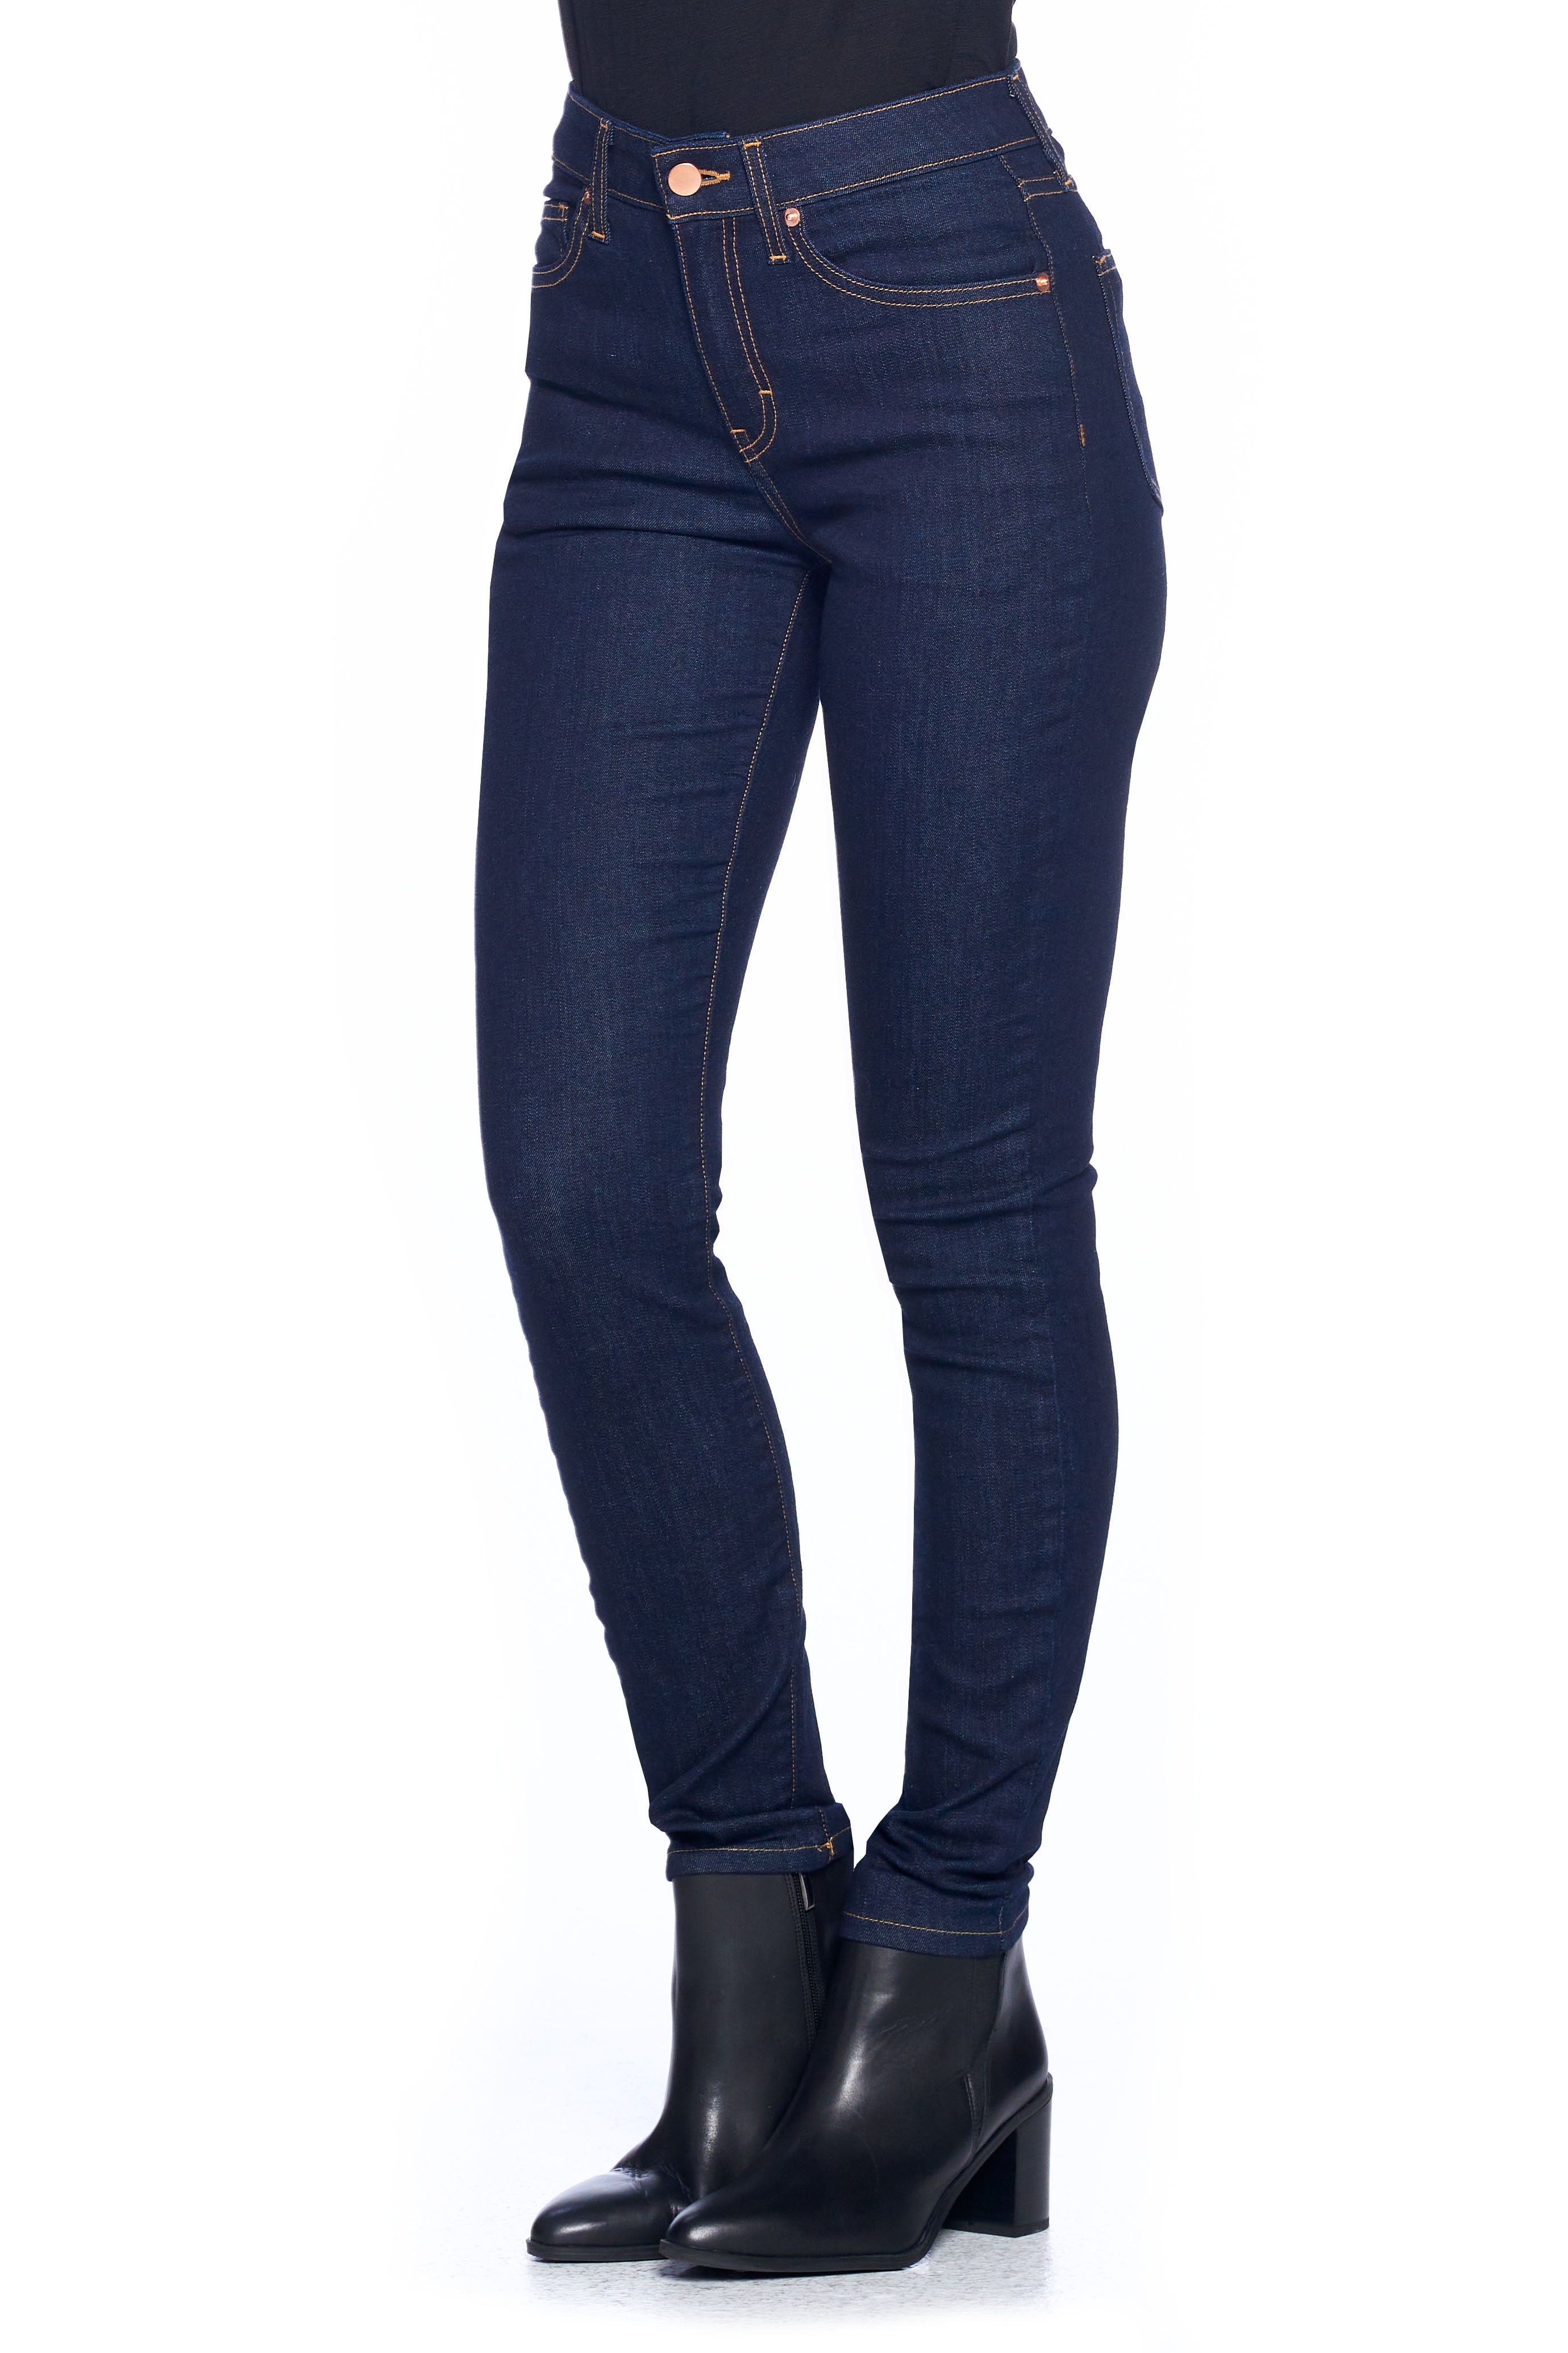 | the Women\'s Dark Fit - | in Indigo Aviator USA Made Comfort Skinny Jeans